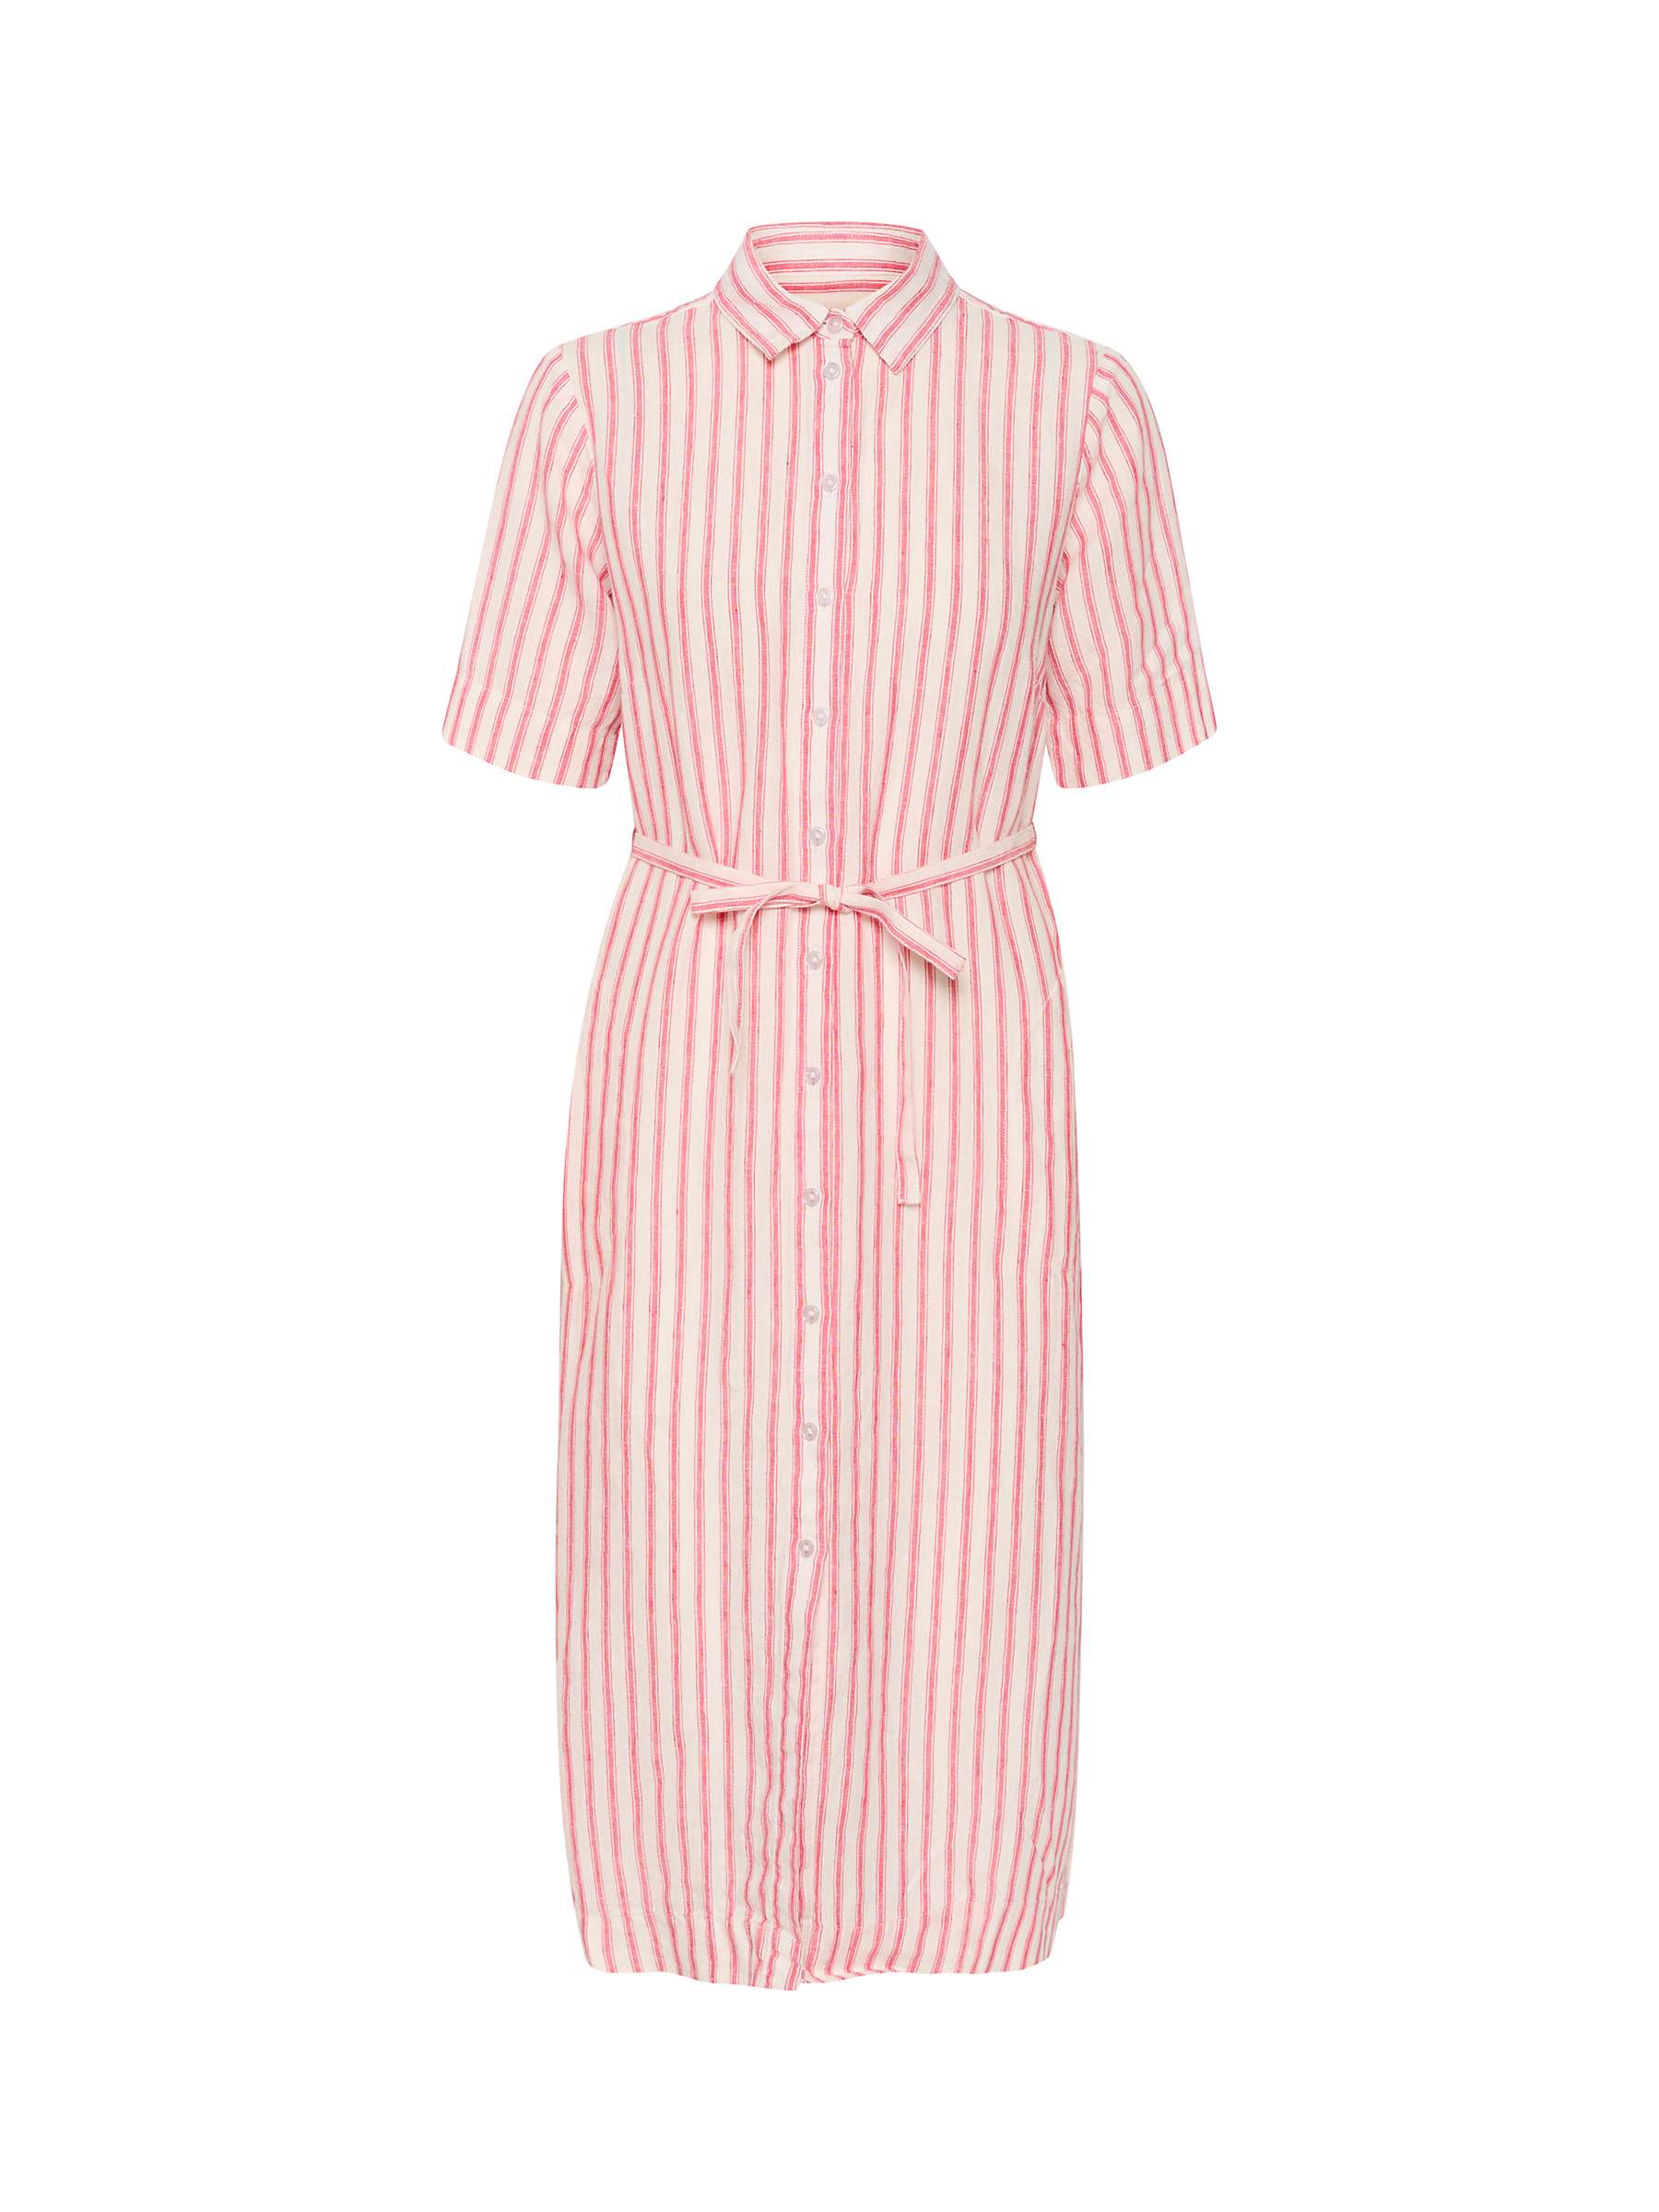 Buy Part Two Emmalou Linen Short Sleeve Shirt Dress, Claret Red Stripe Online at johnlewis.com